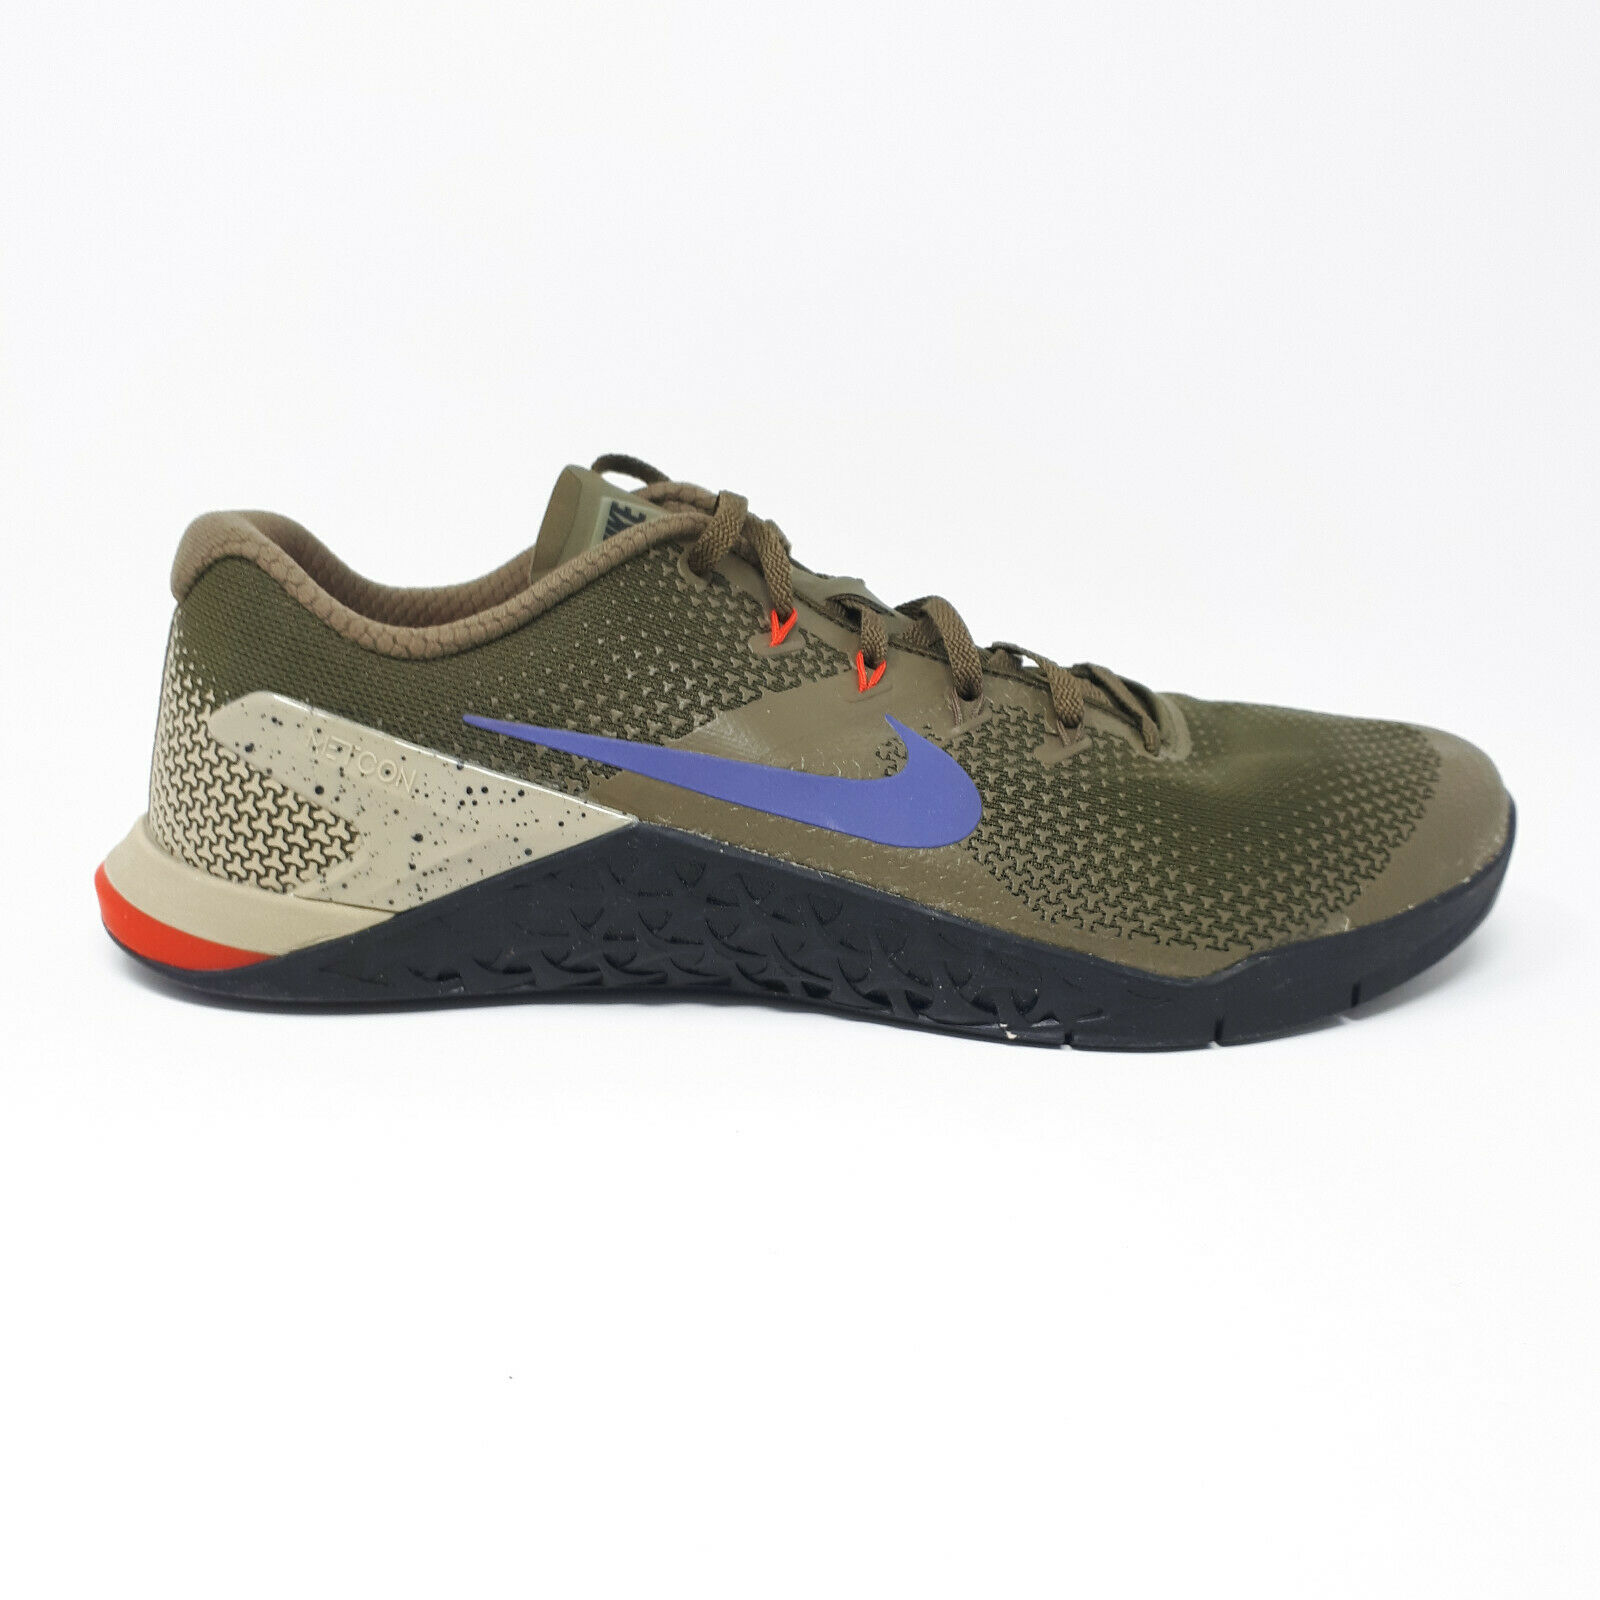 Nike Metcon 4 Olive Green AH7453 342 Cross Training Gym Shoe Sneaker Mens 13 NEW